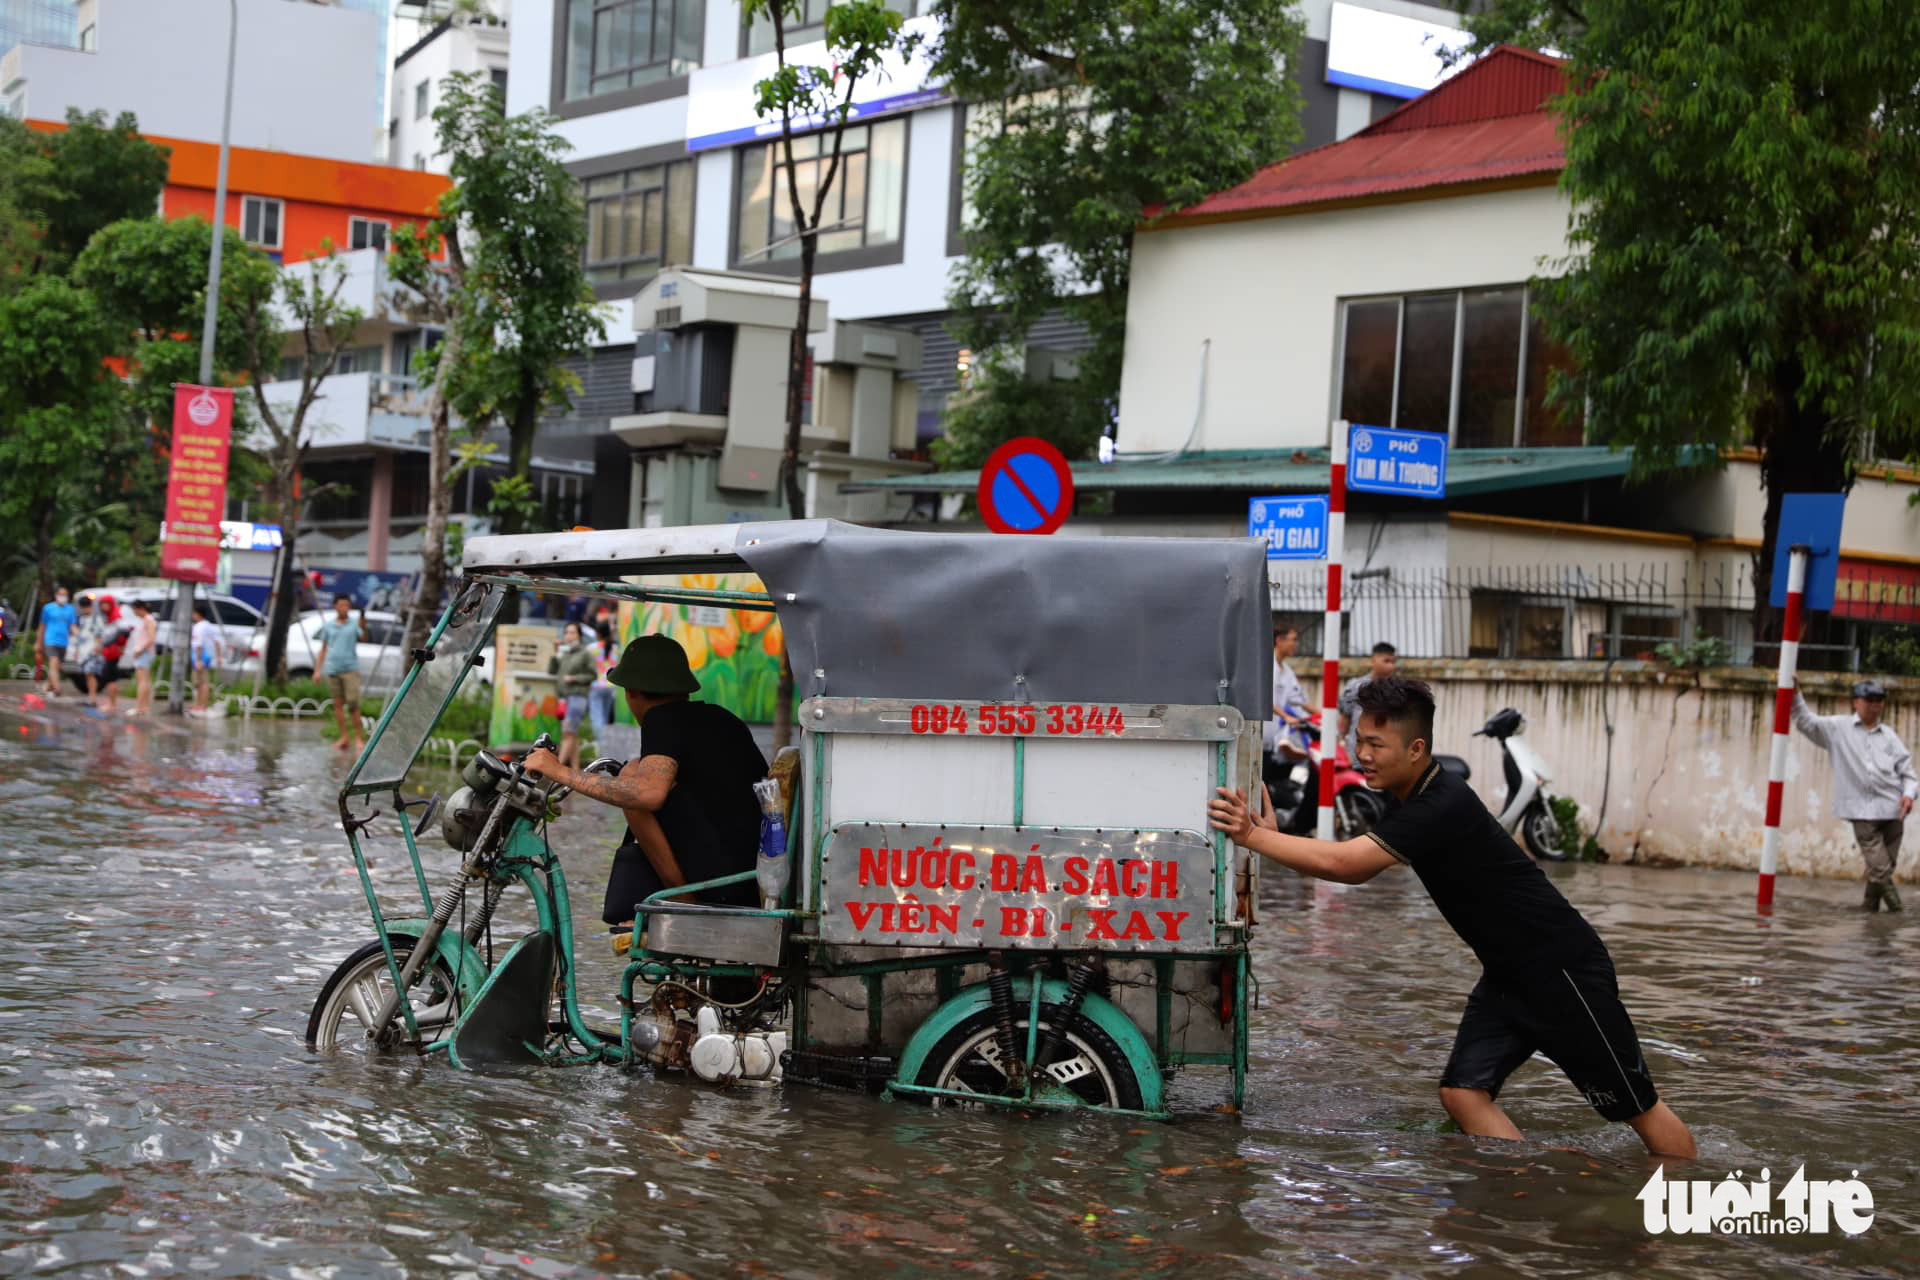 A three-wheeled vehicle stalls on Van Cao Street in Hanoi, May 29, 2022. Photo: Danh Khang / Tuoi Tre